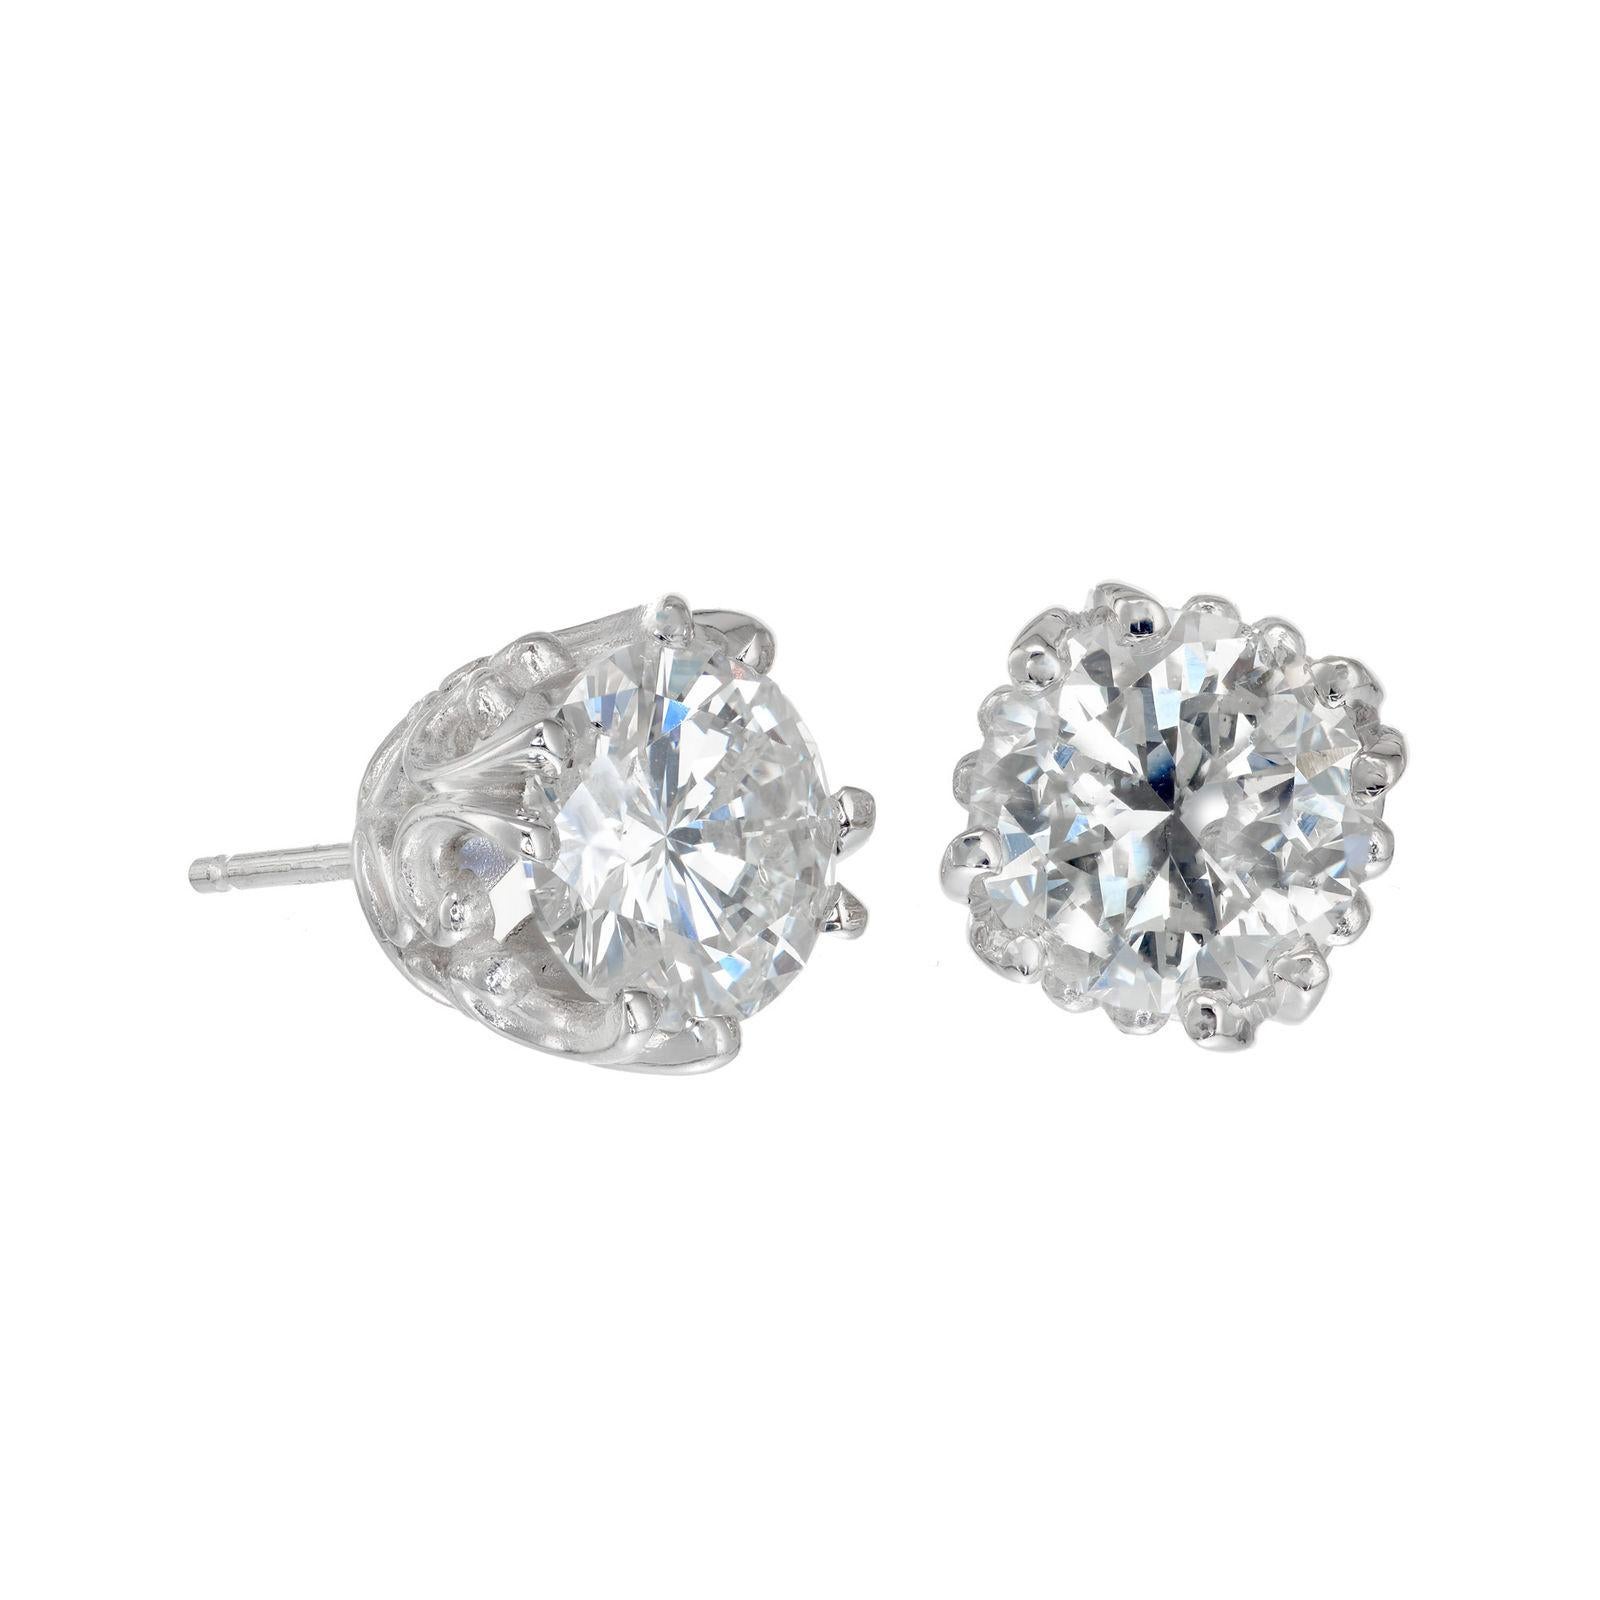 Peter Suchy GIA Certified 1.46 Carat Diamond Platinum Stud Earrings